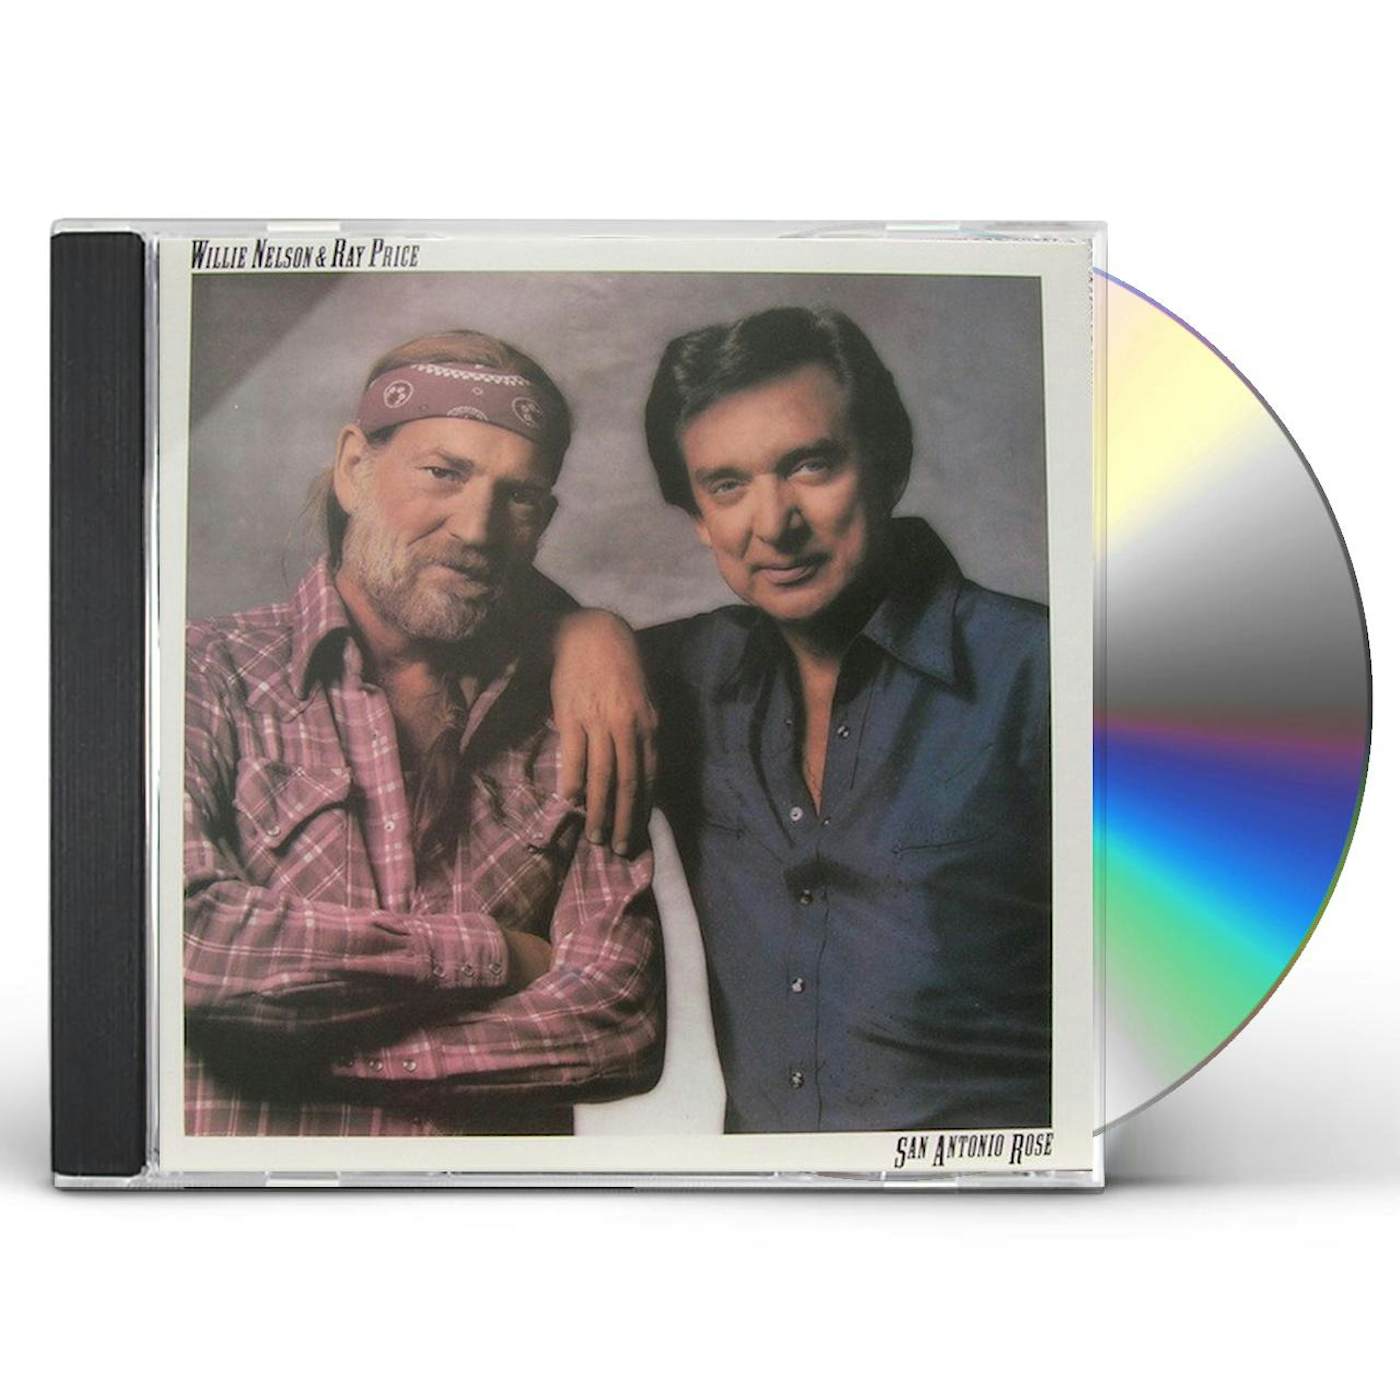 Willie Nelson SAN ANTONIO ROSE CD